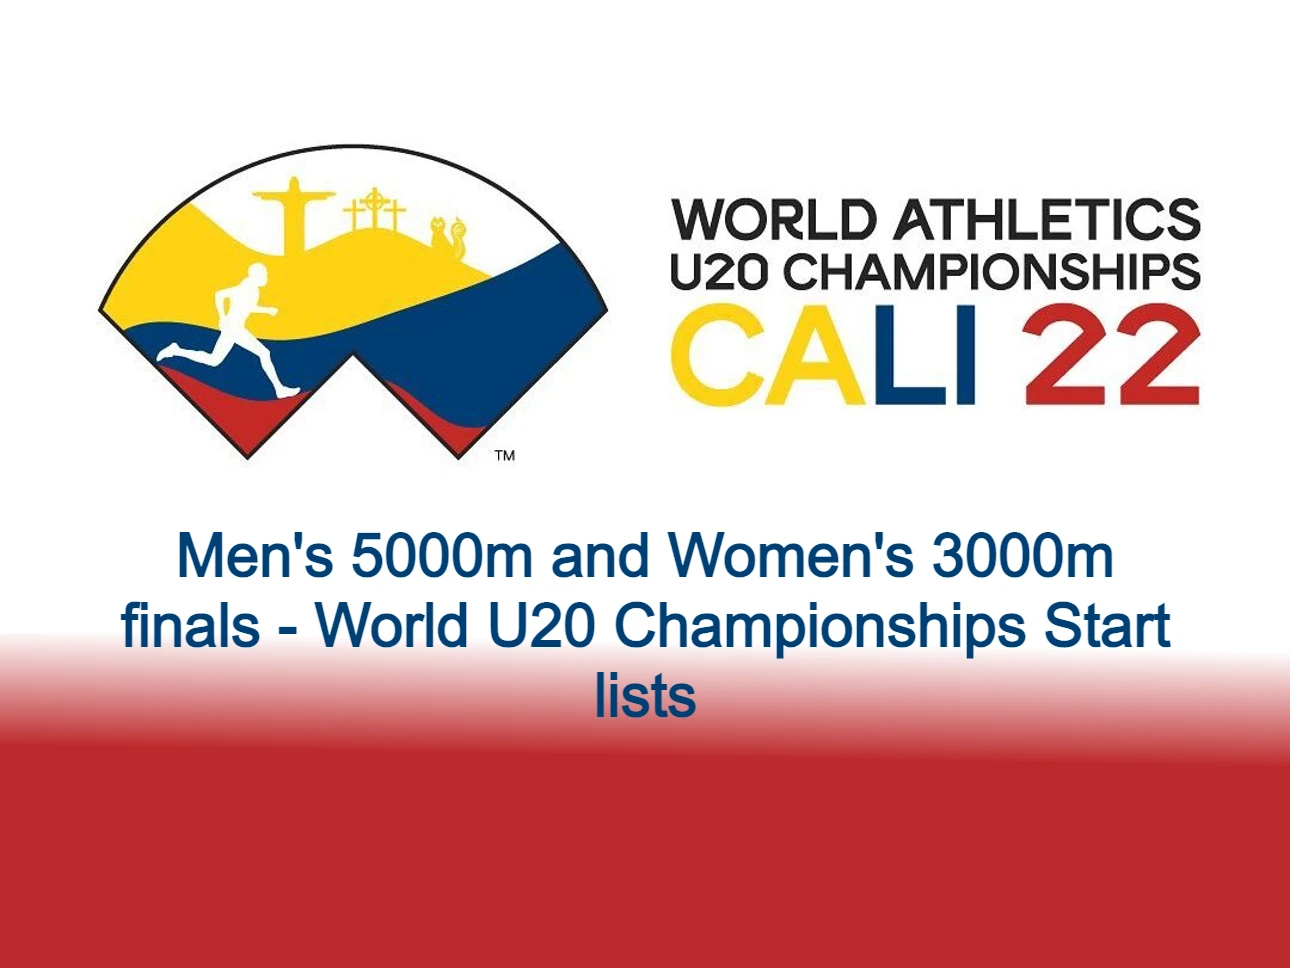 Men's 5000m and Women's 3000m finals - World U20 Championships Start lists